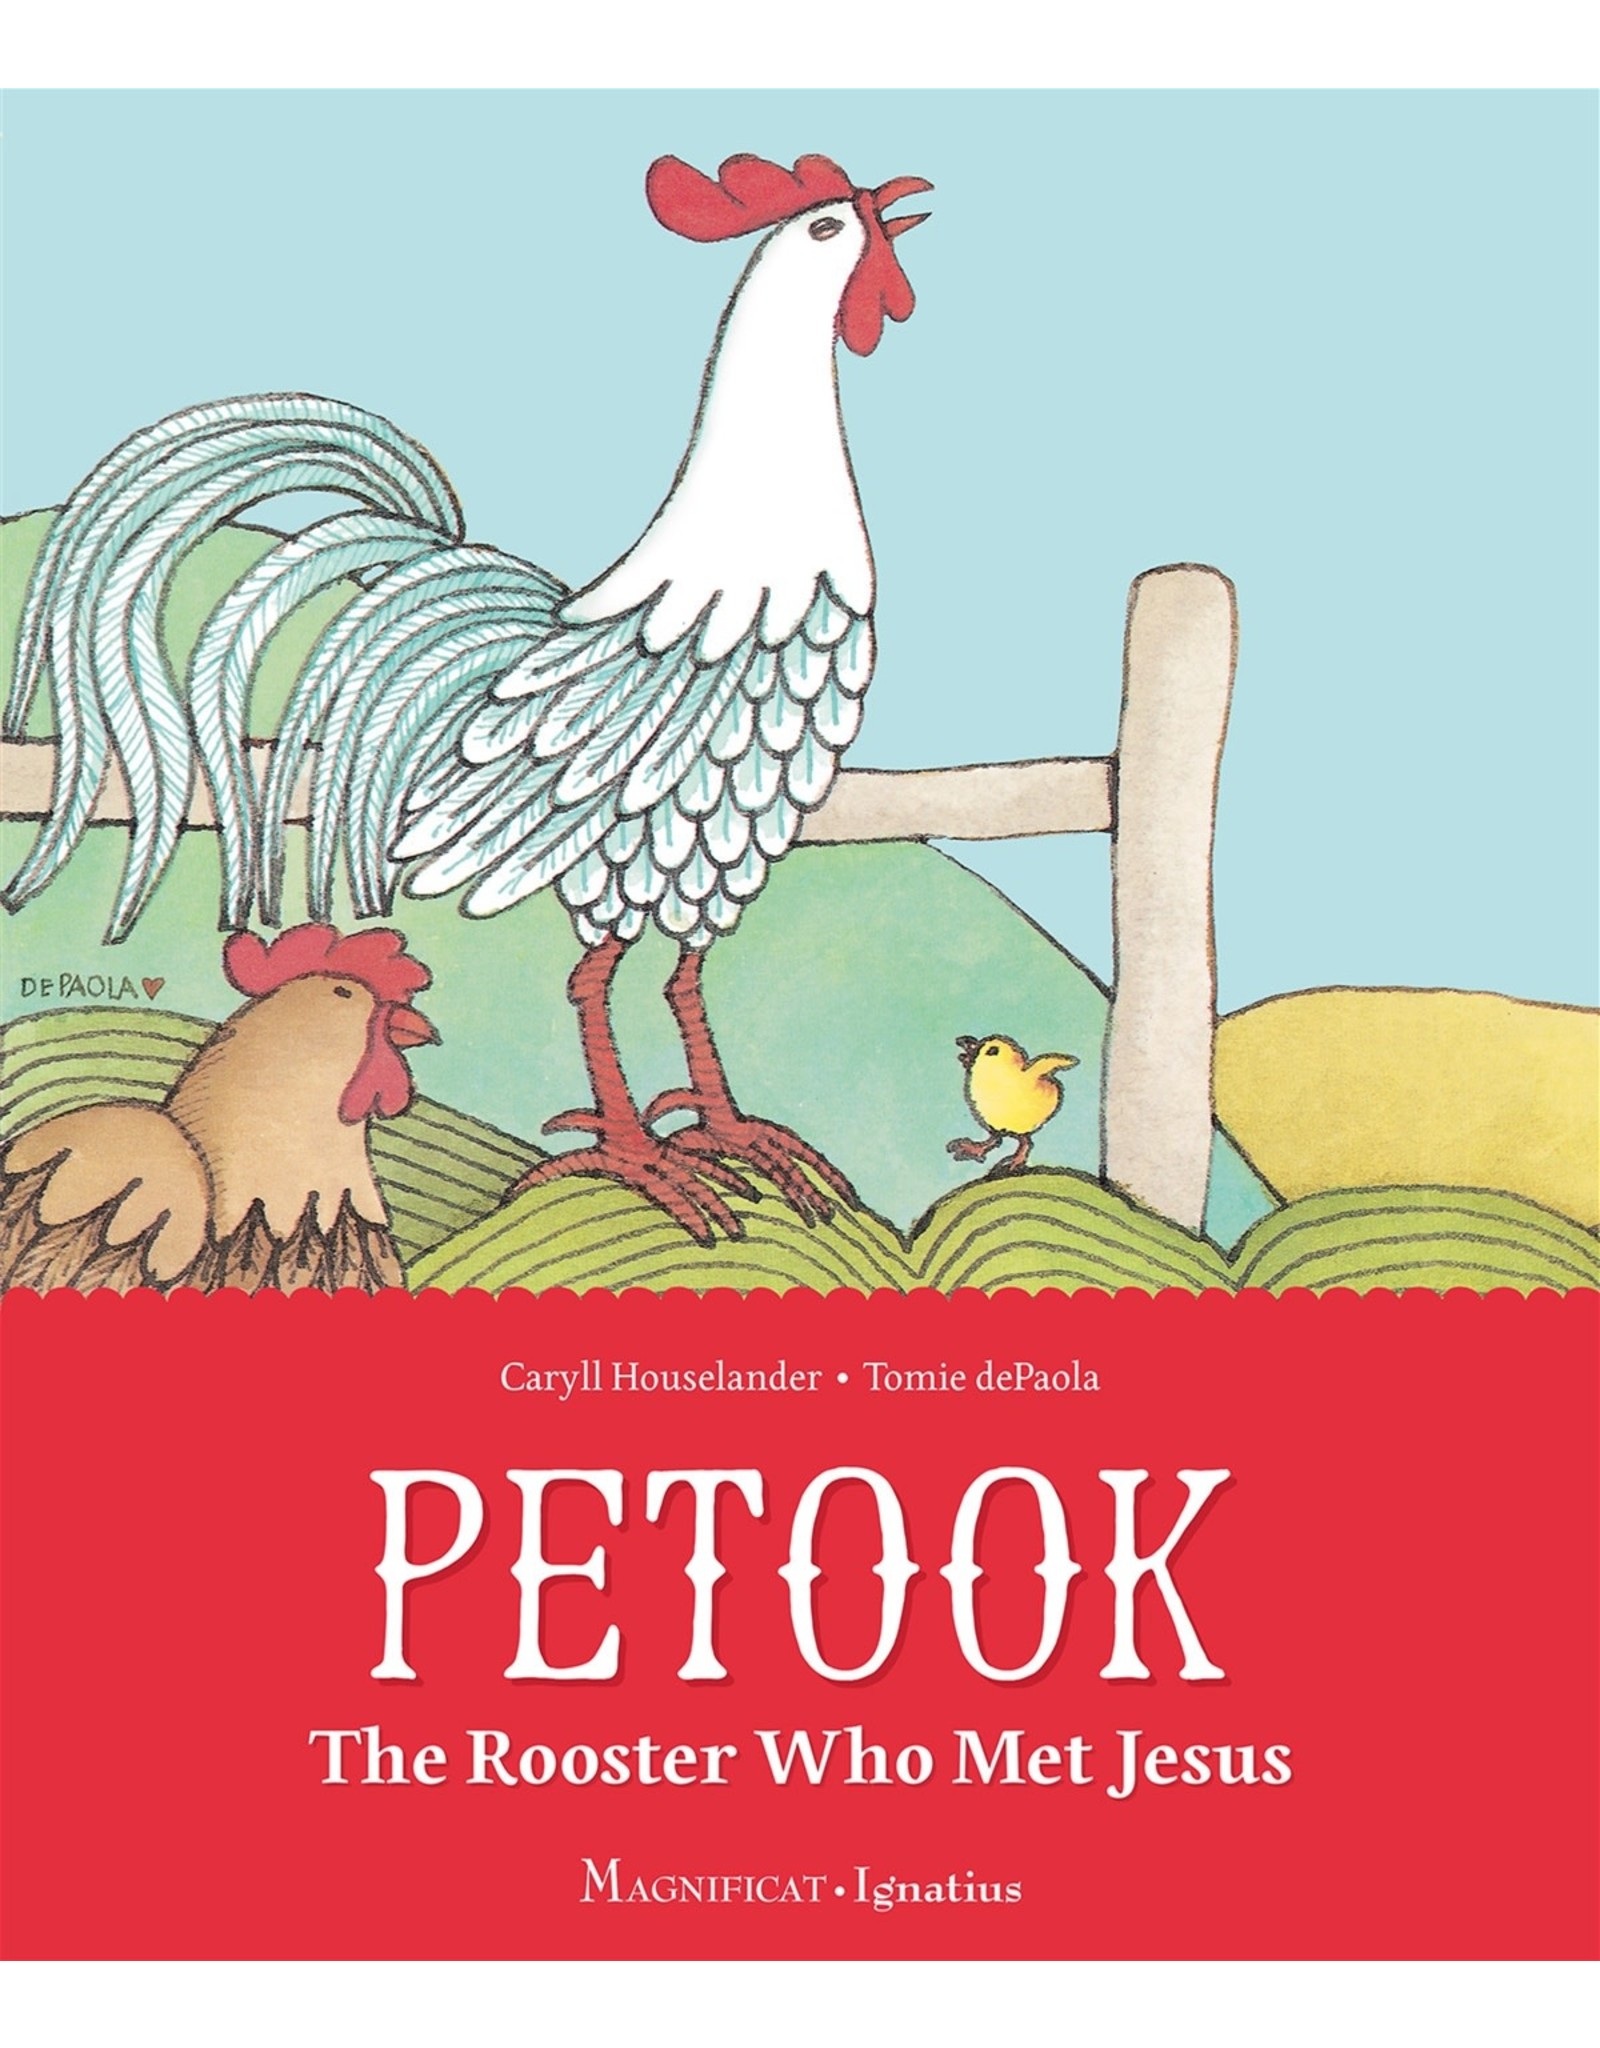 Petook: The Rooster Who Met Jesus